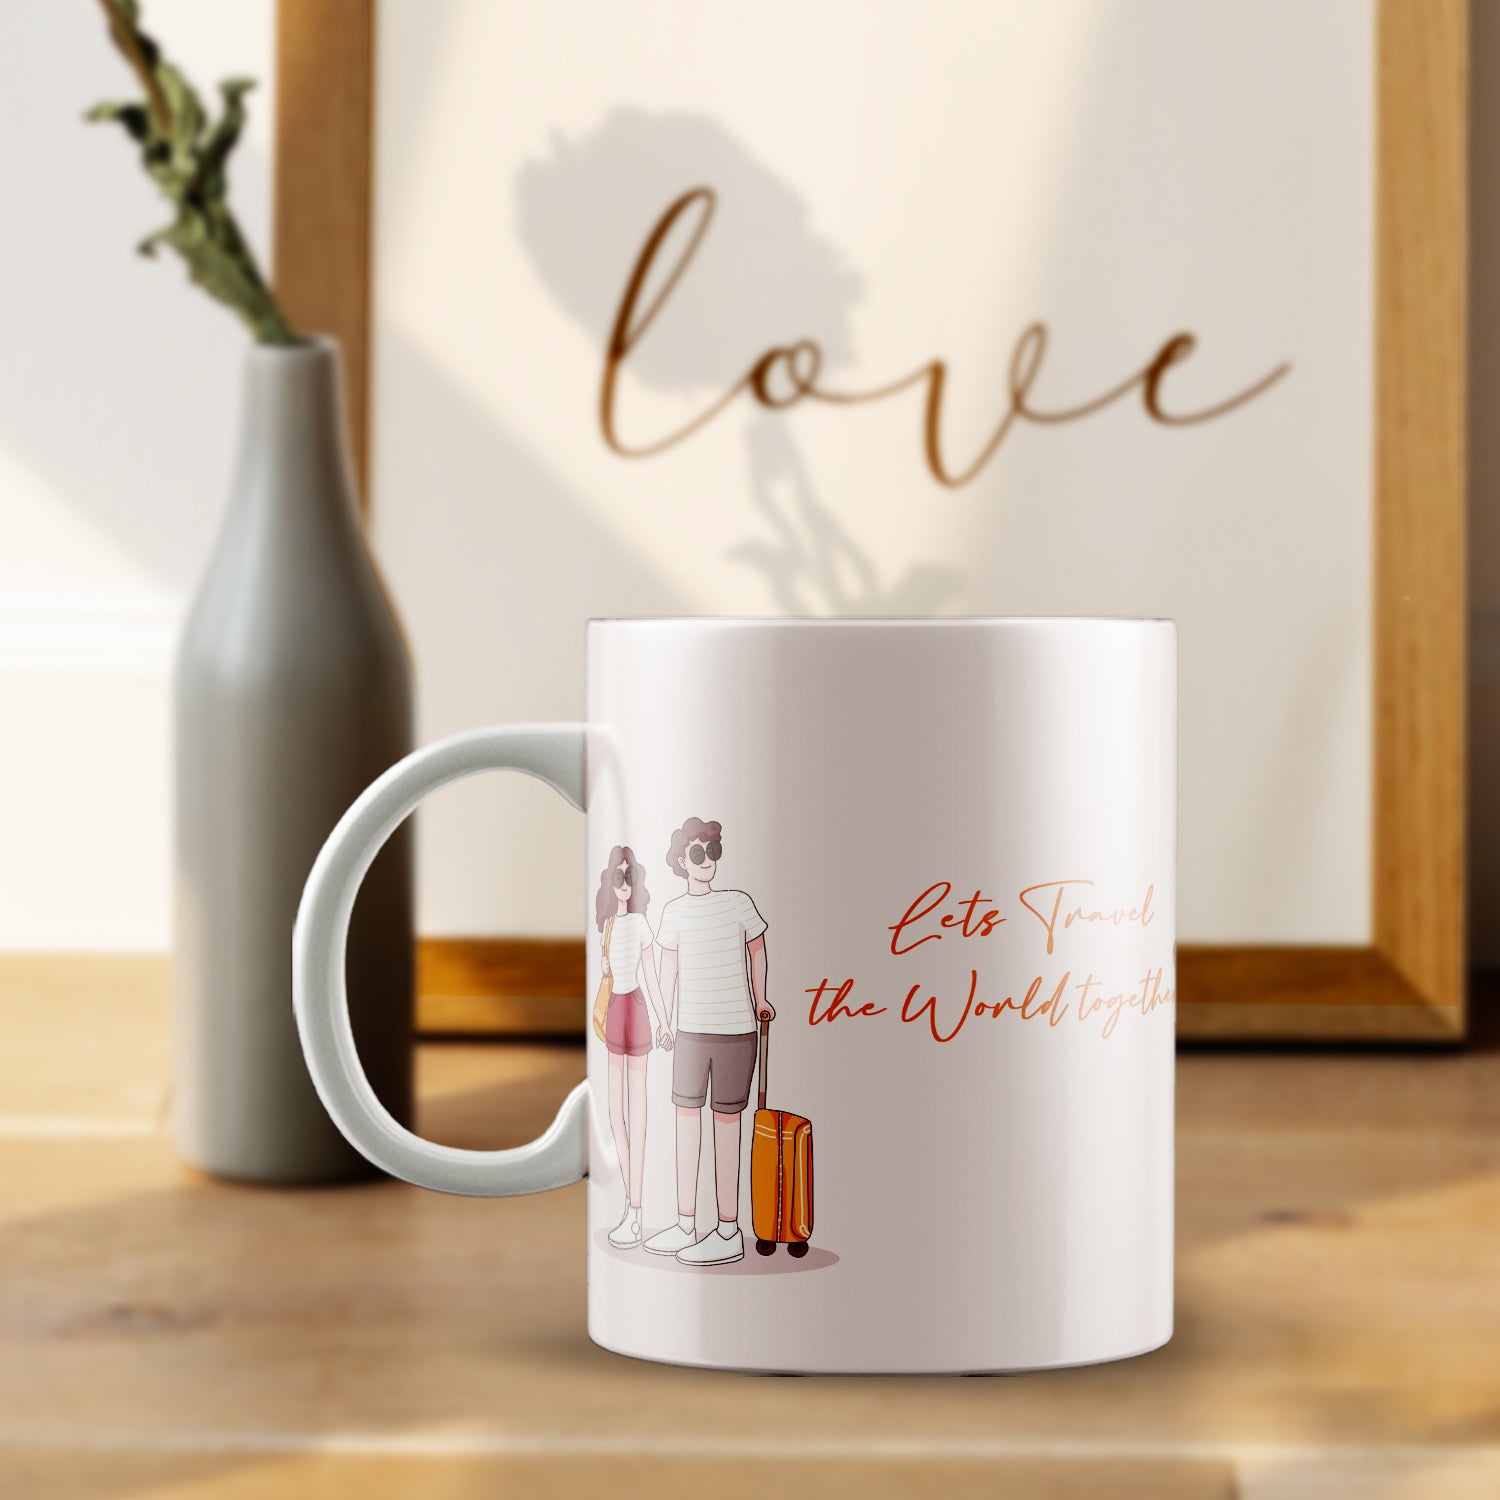 Let Travel the world together Valentine Love theme Ceramic Coffee Mug 1